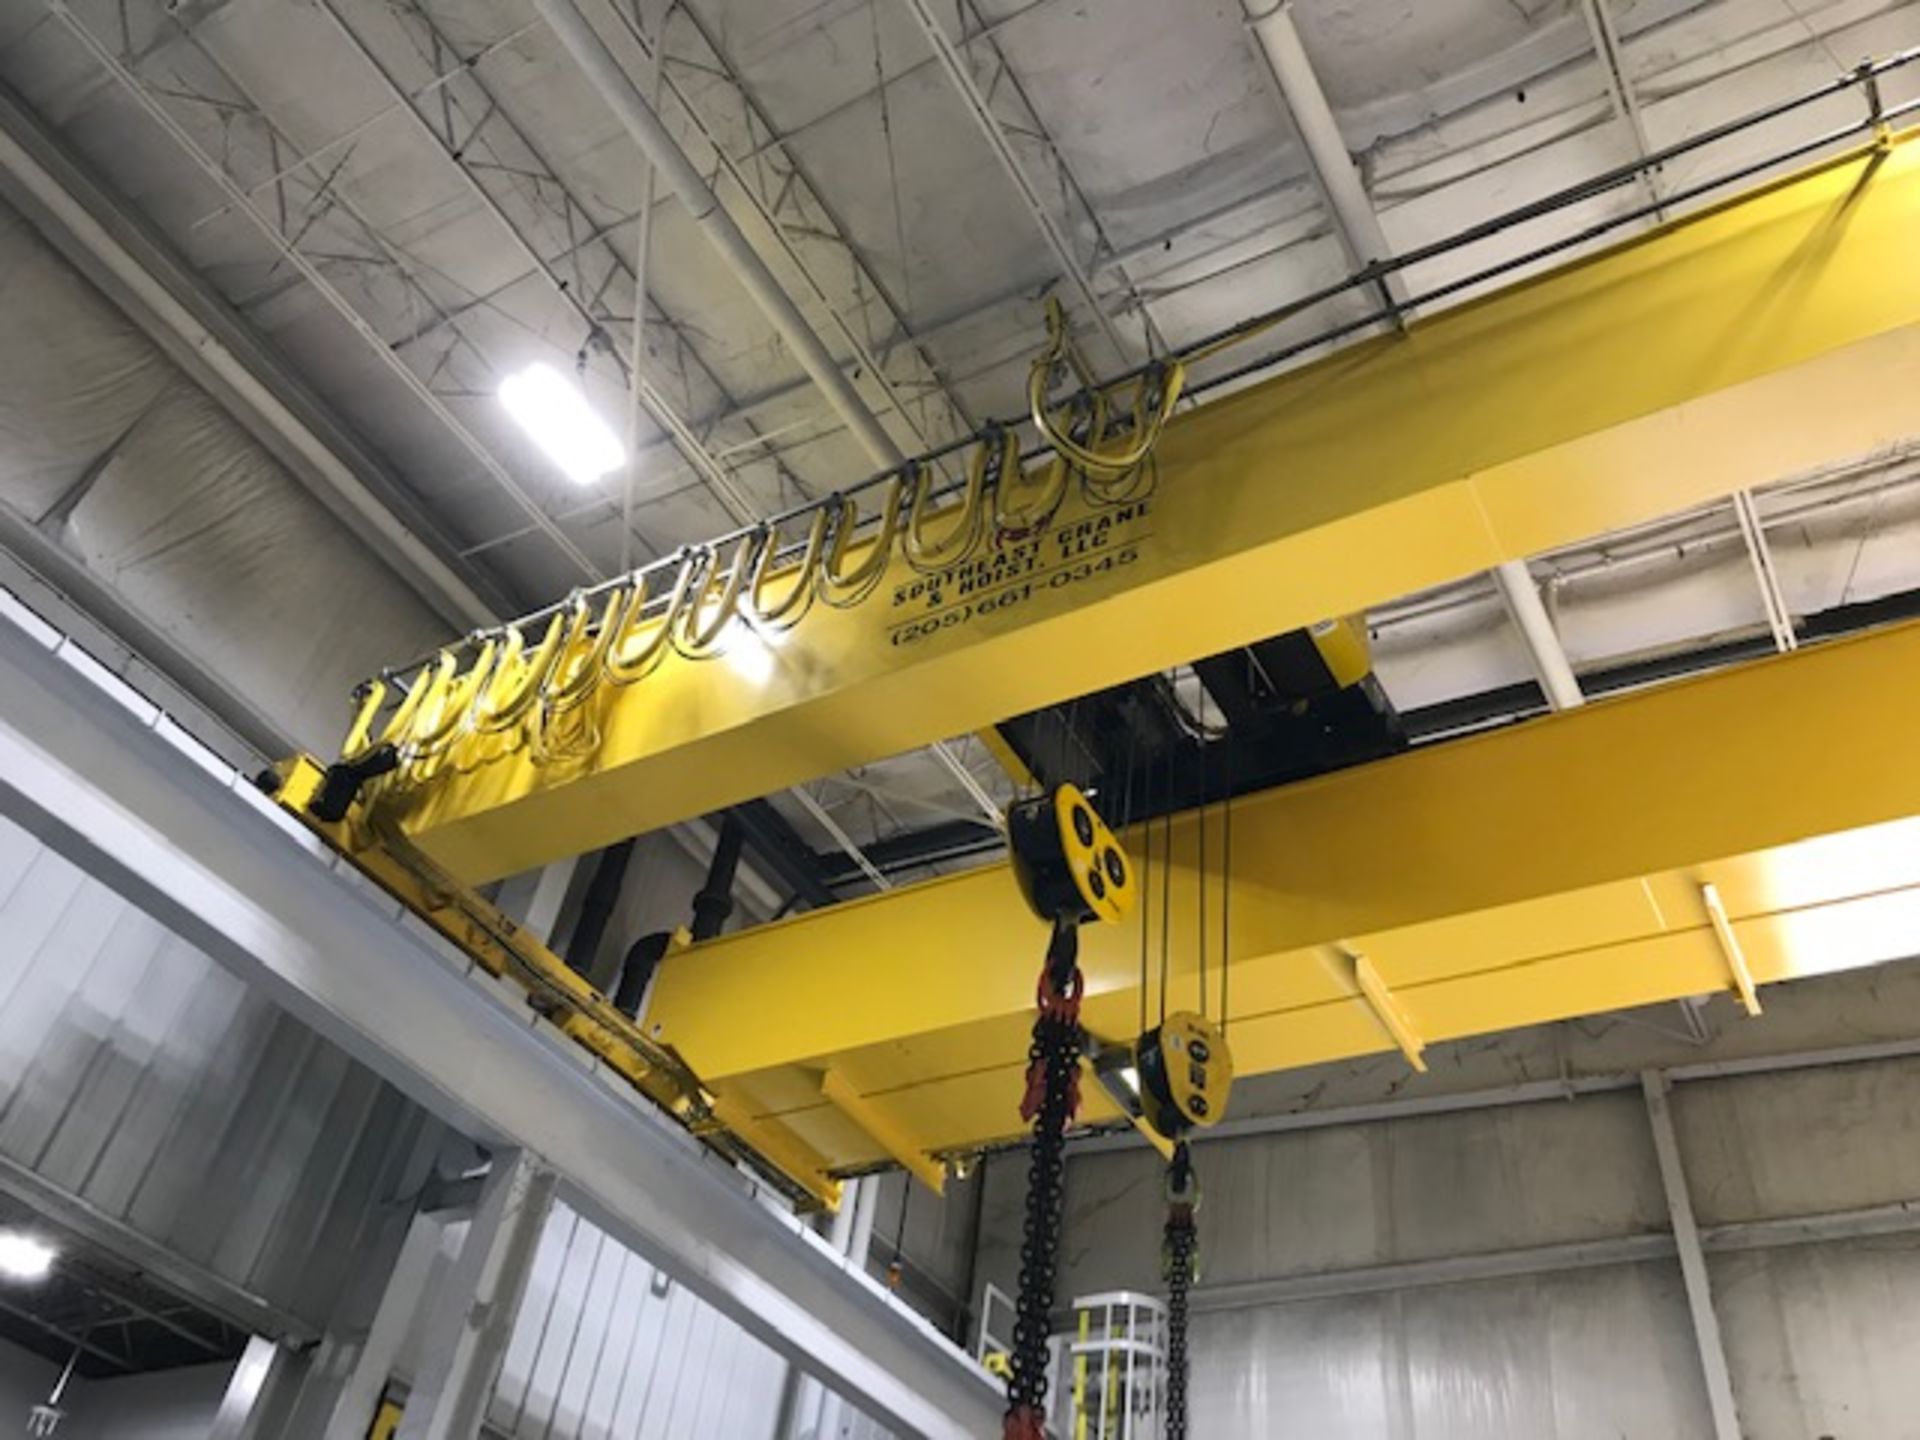 New 2018 Southeast Crane & Hoist Double Box Girder Overhead Bridge Crane: 50 Ton Capacity Main Hoist - Image 3 of 5